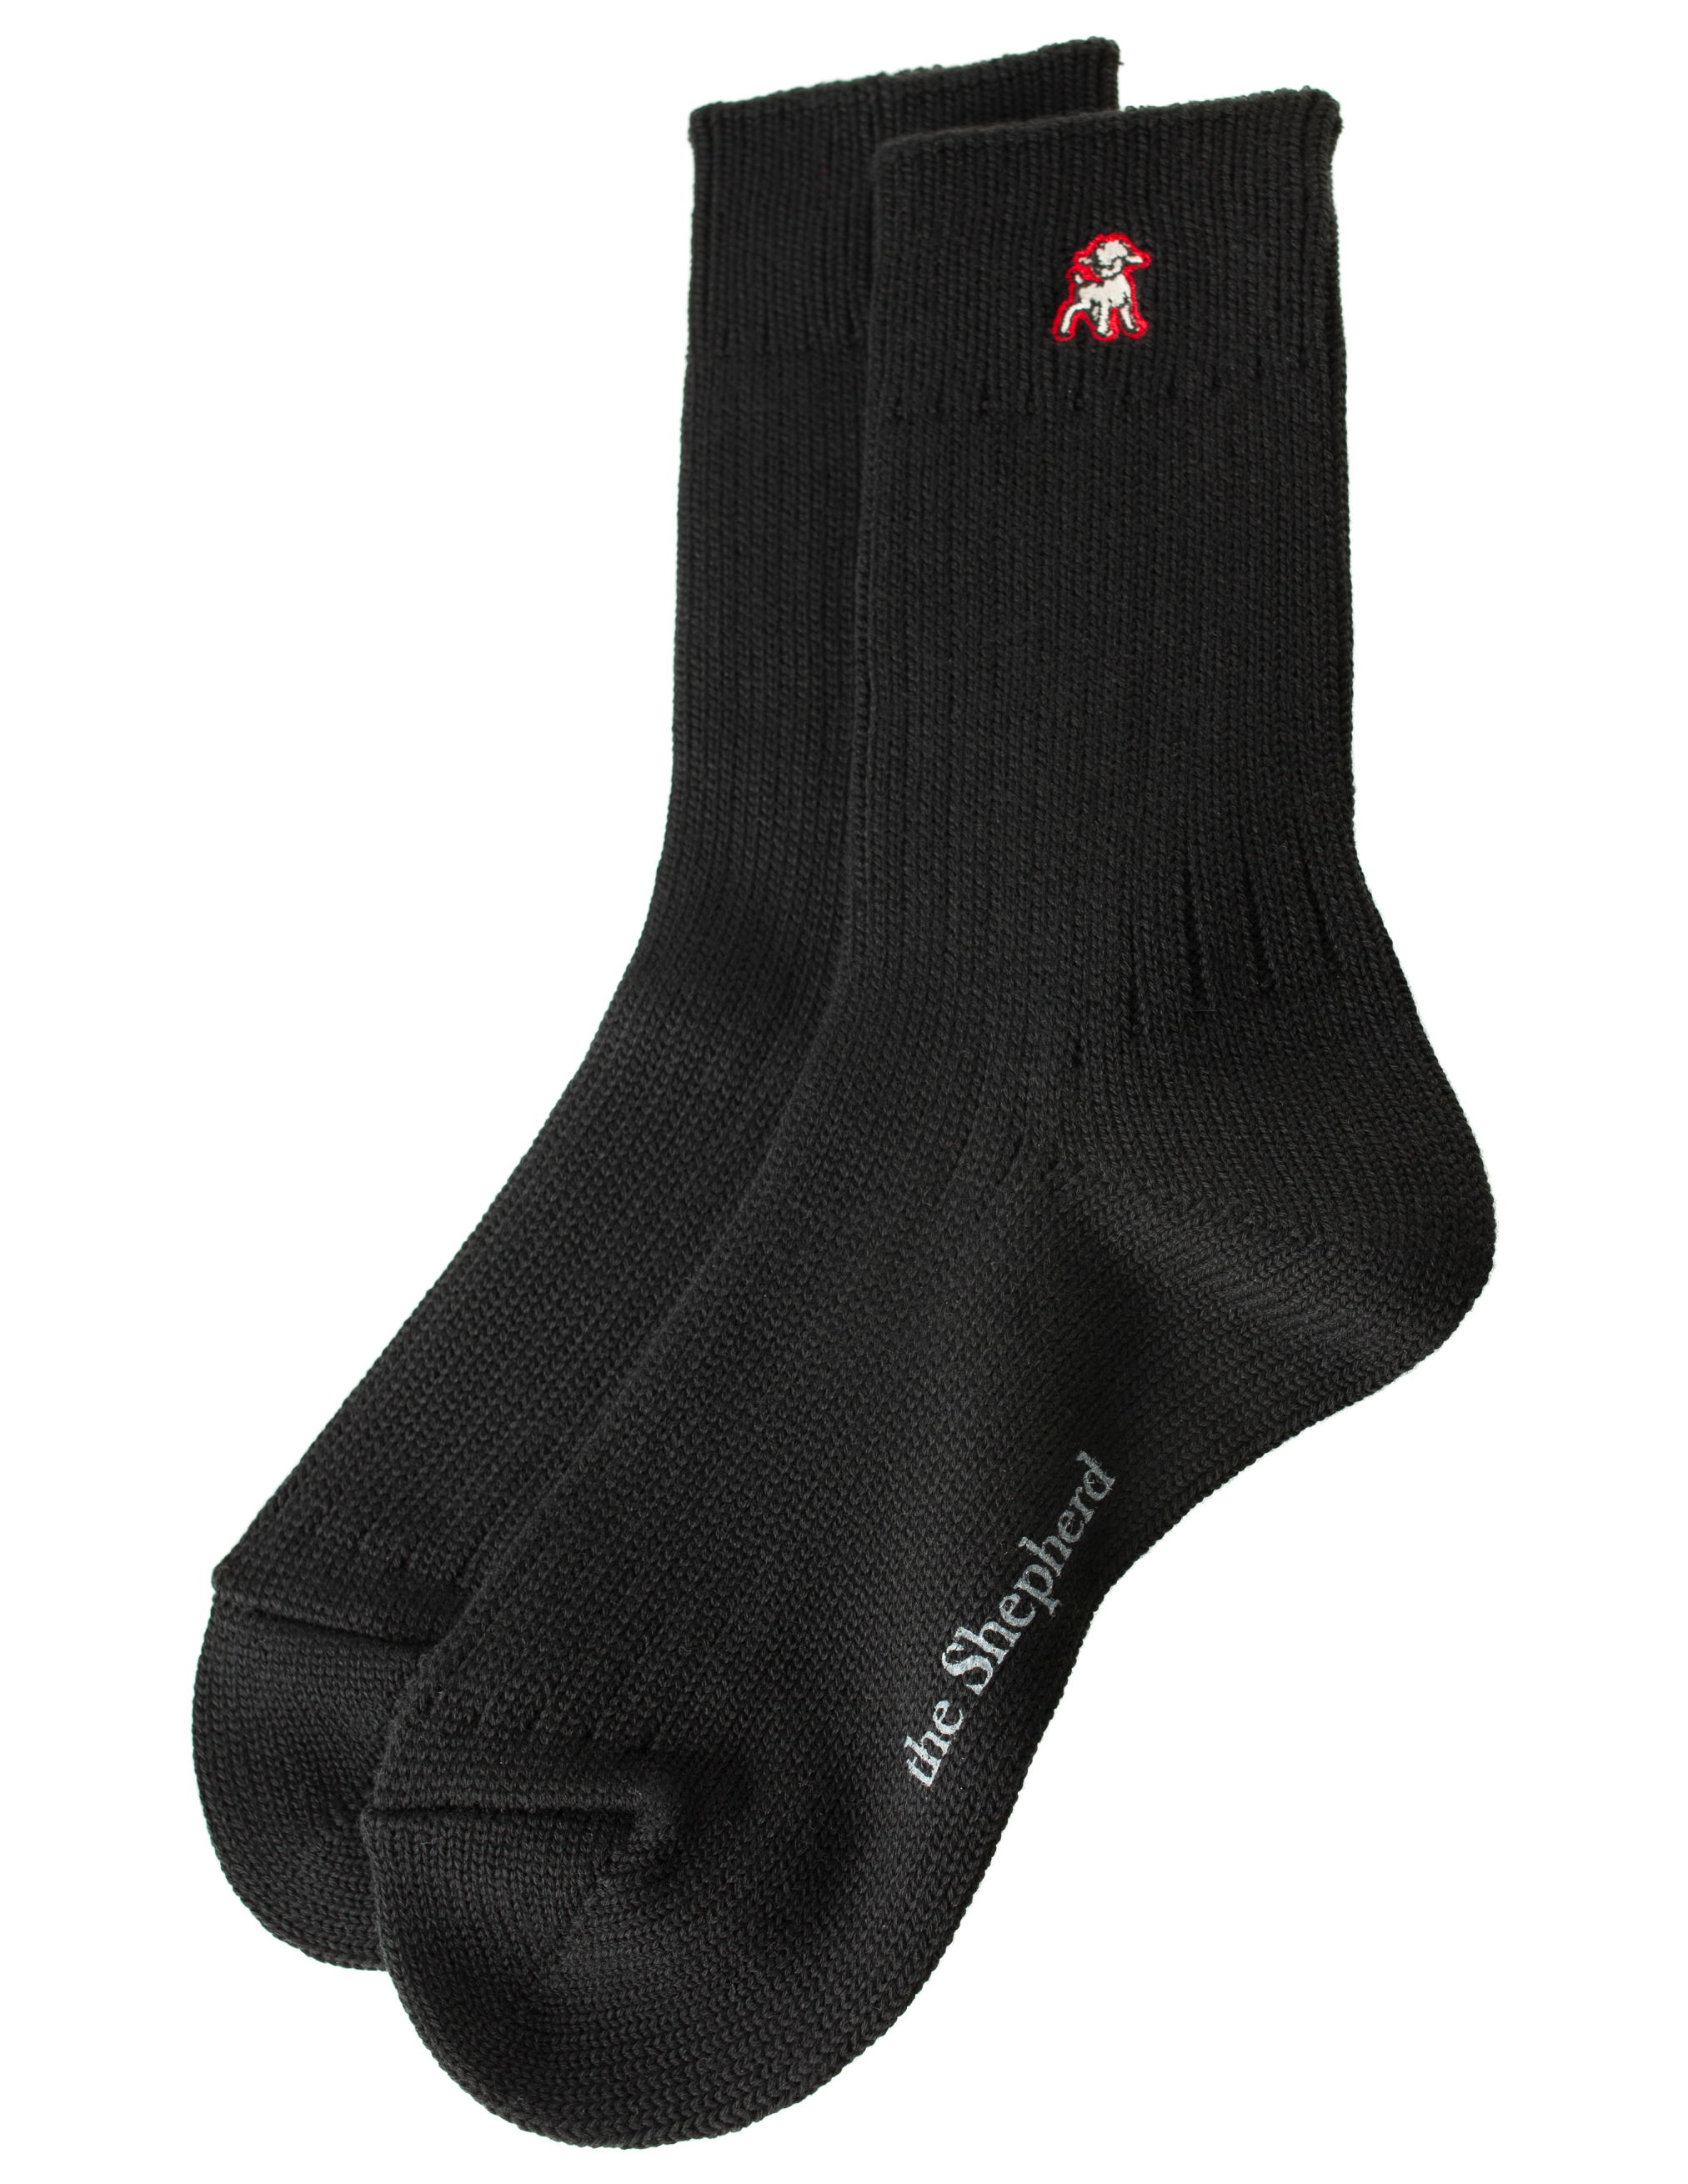 Черные носки с вышивкой Undercover US2B4L01/BLACK, размер One Size